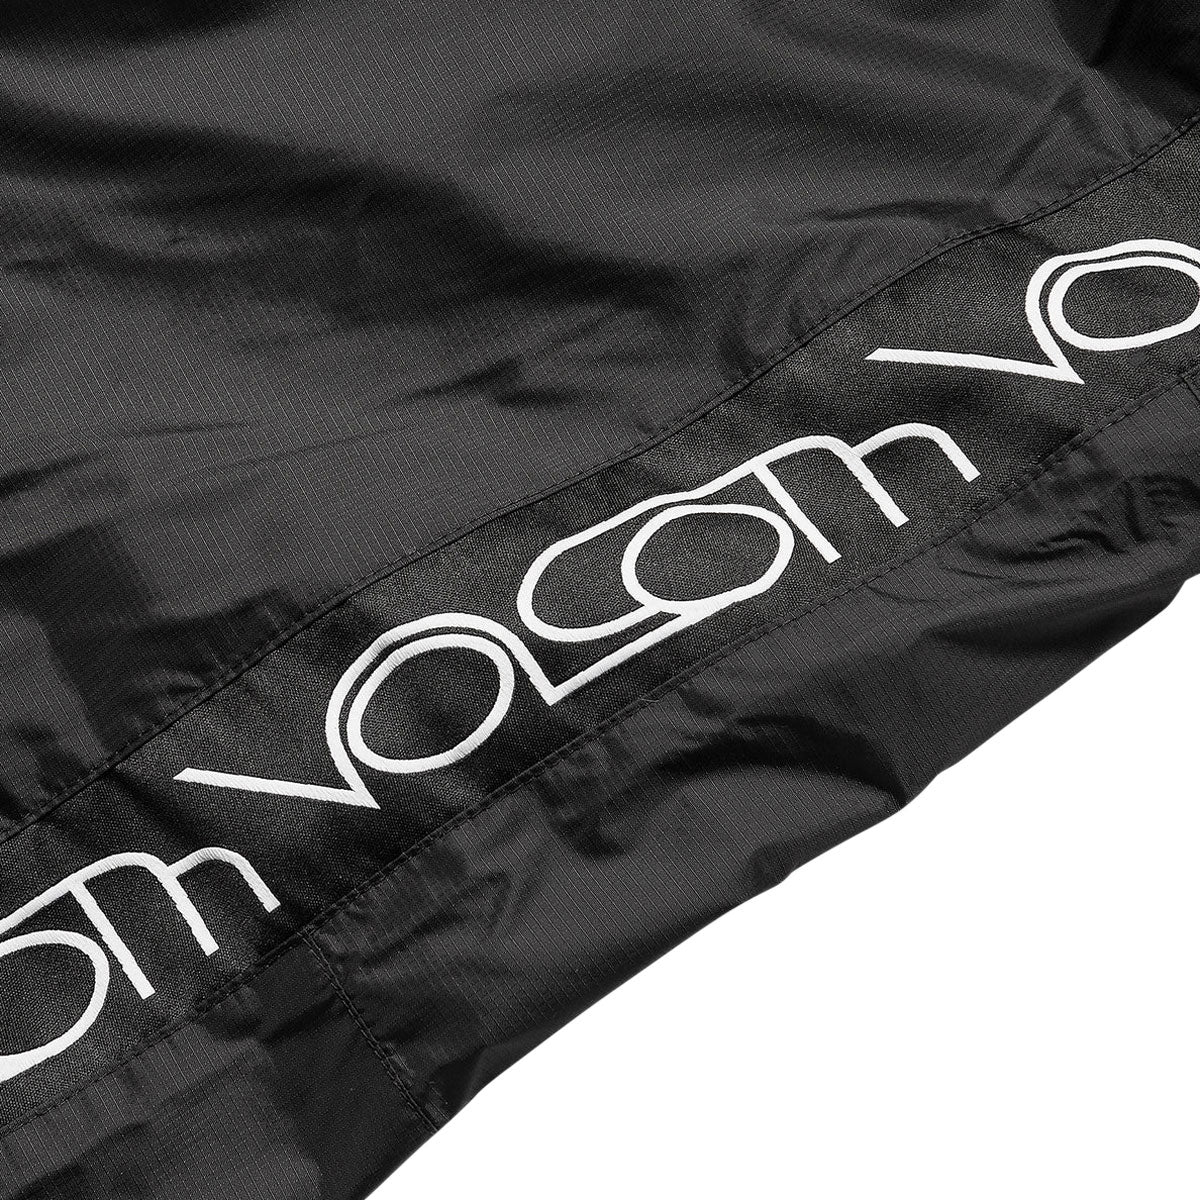 Volcom New Slashslapper Snowboard Pants - Black image 3